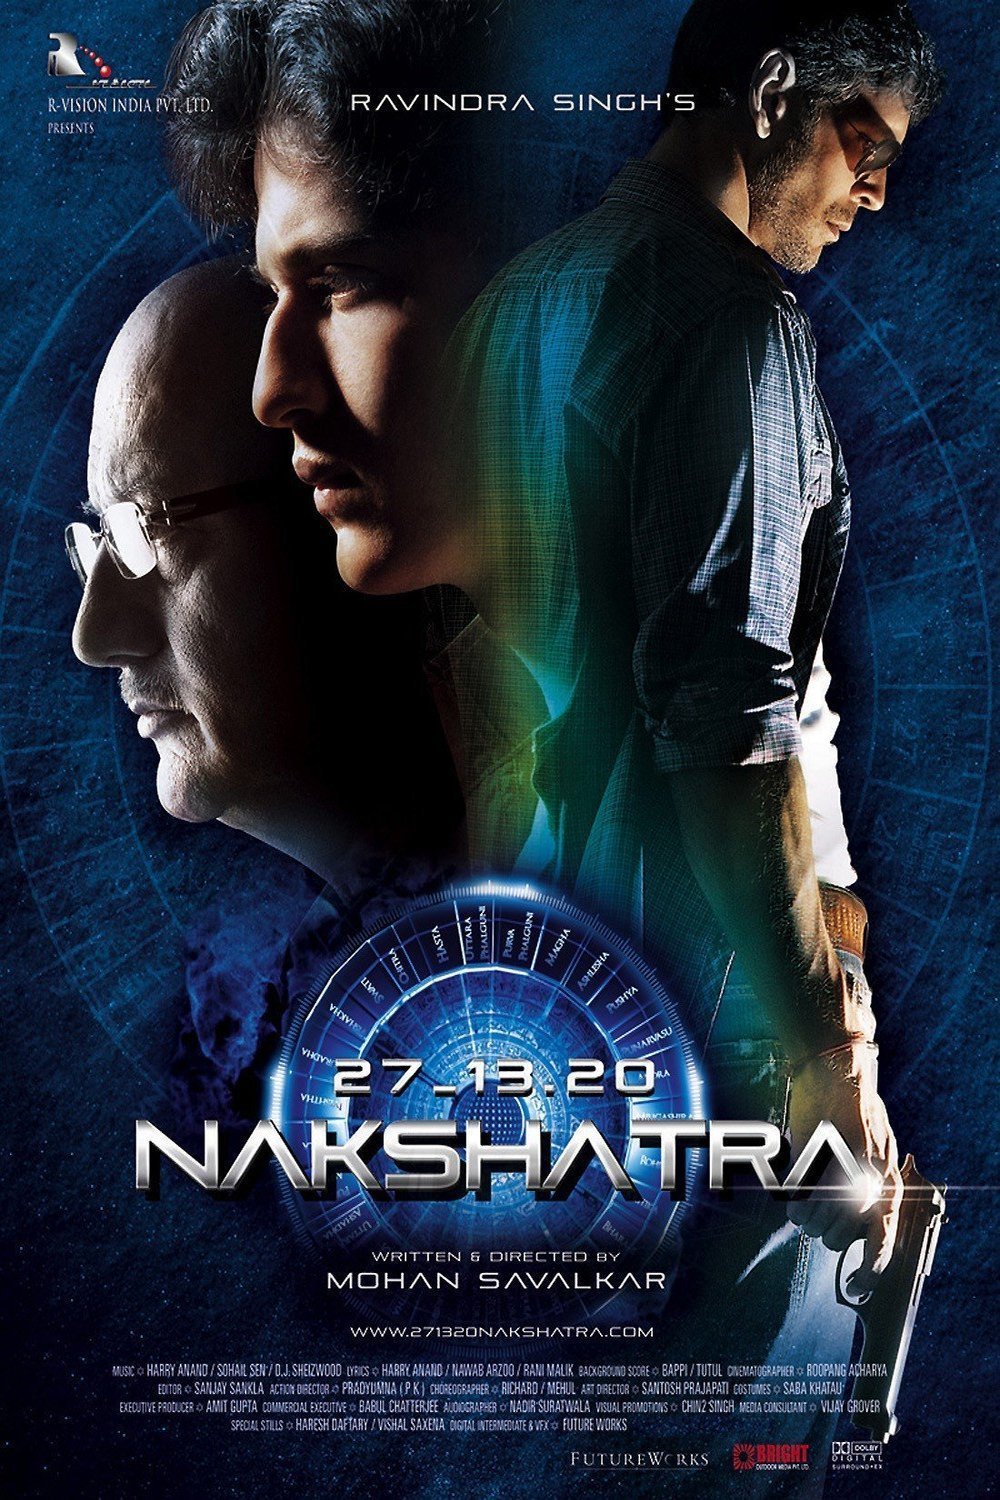 Hindi poster of the movie Nakshatra